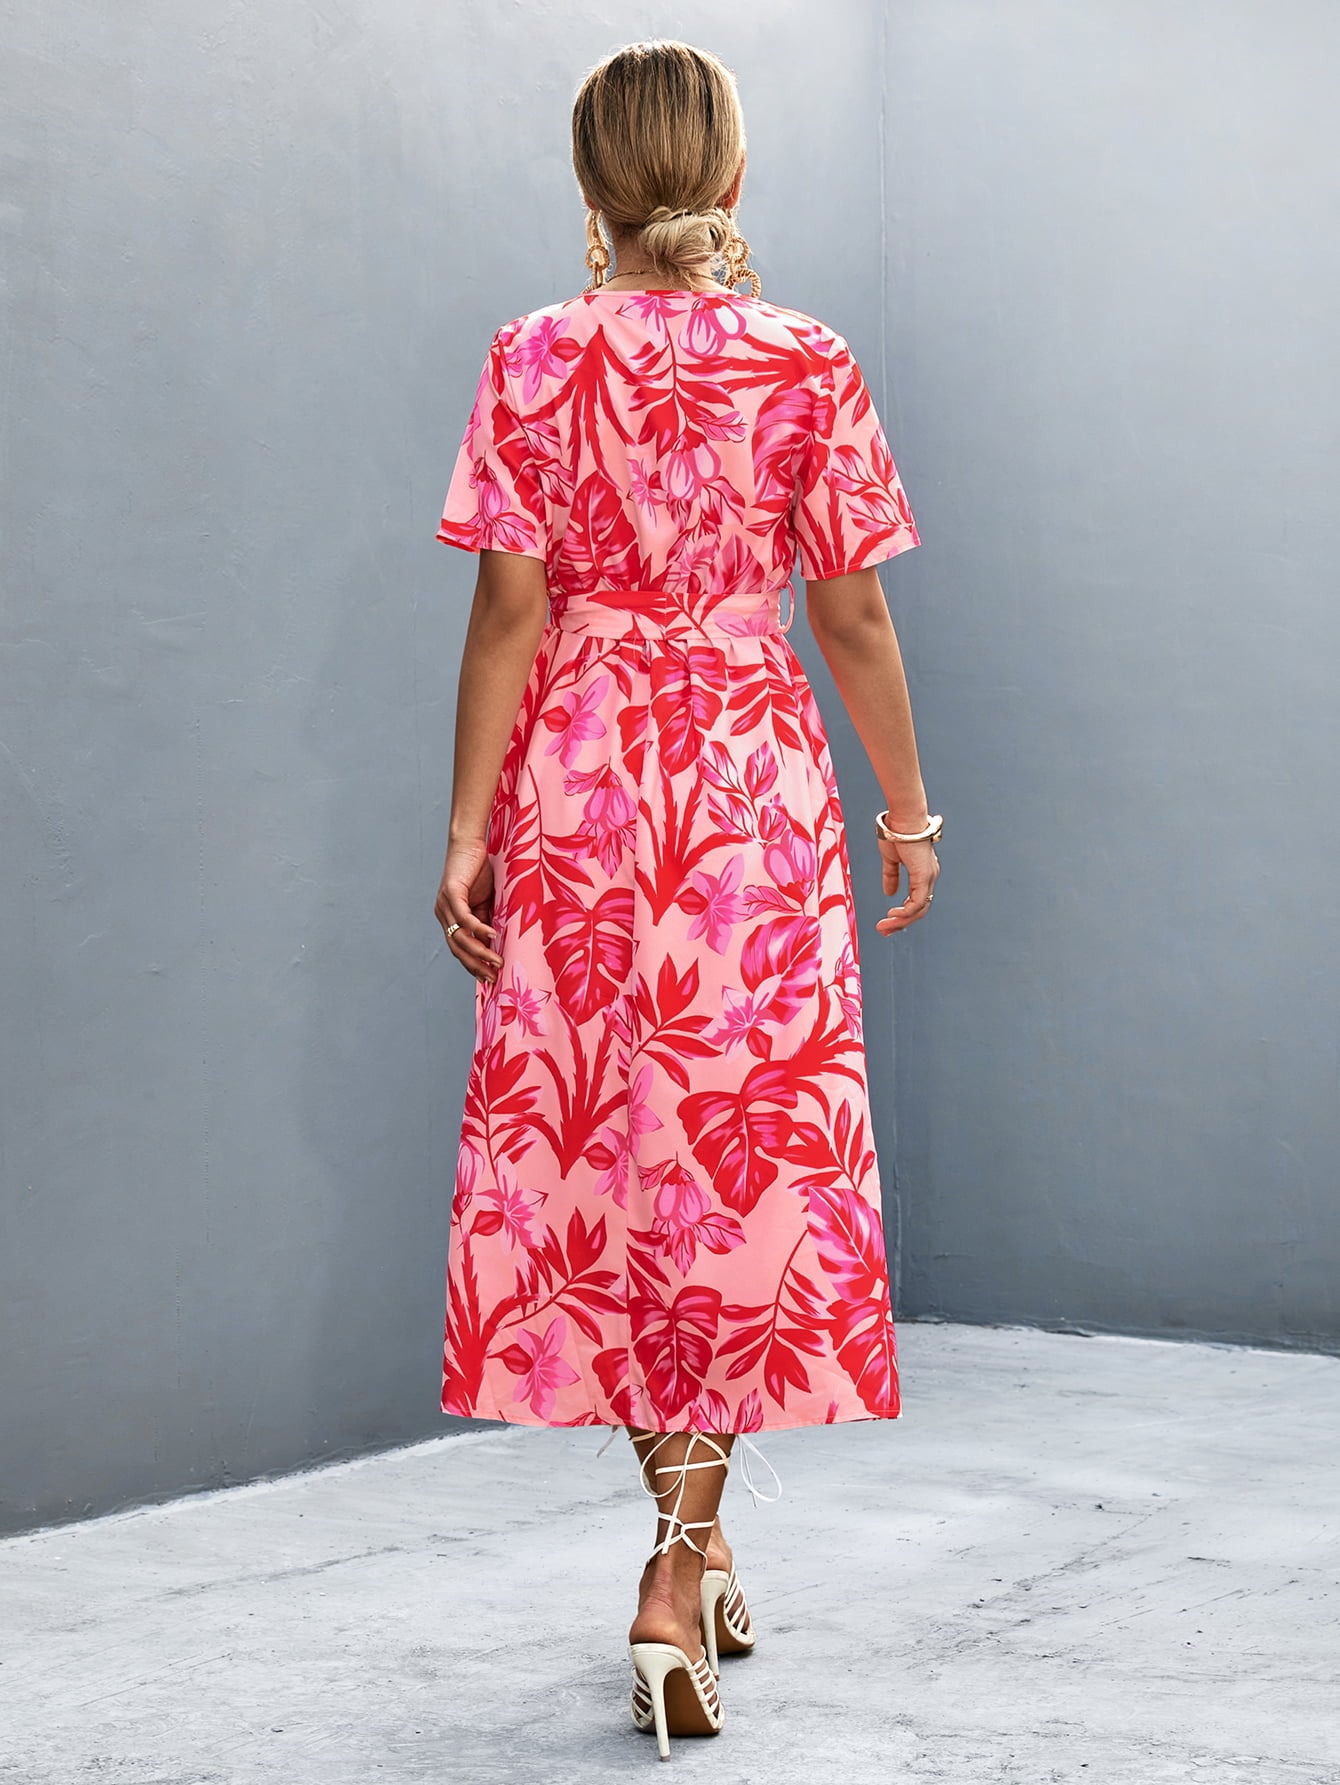 Summer Beach Floral Midi Dress for Women - Surplice Neck, High Slit, Tie Waist - Ideal Wedding Guest Attire